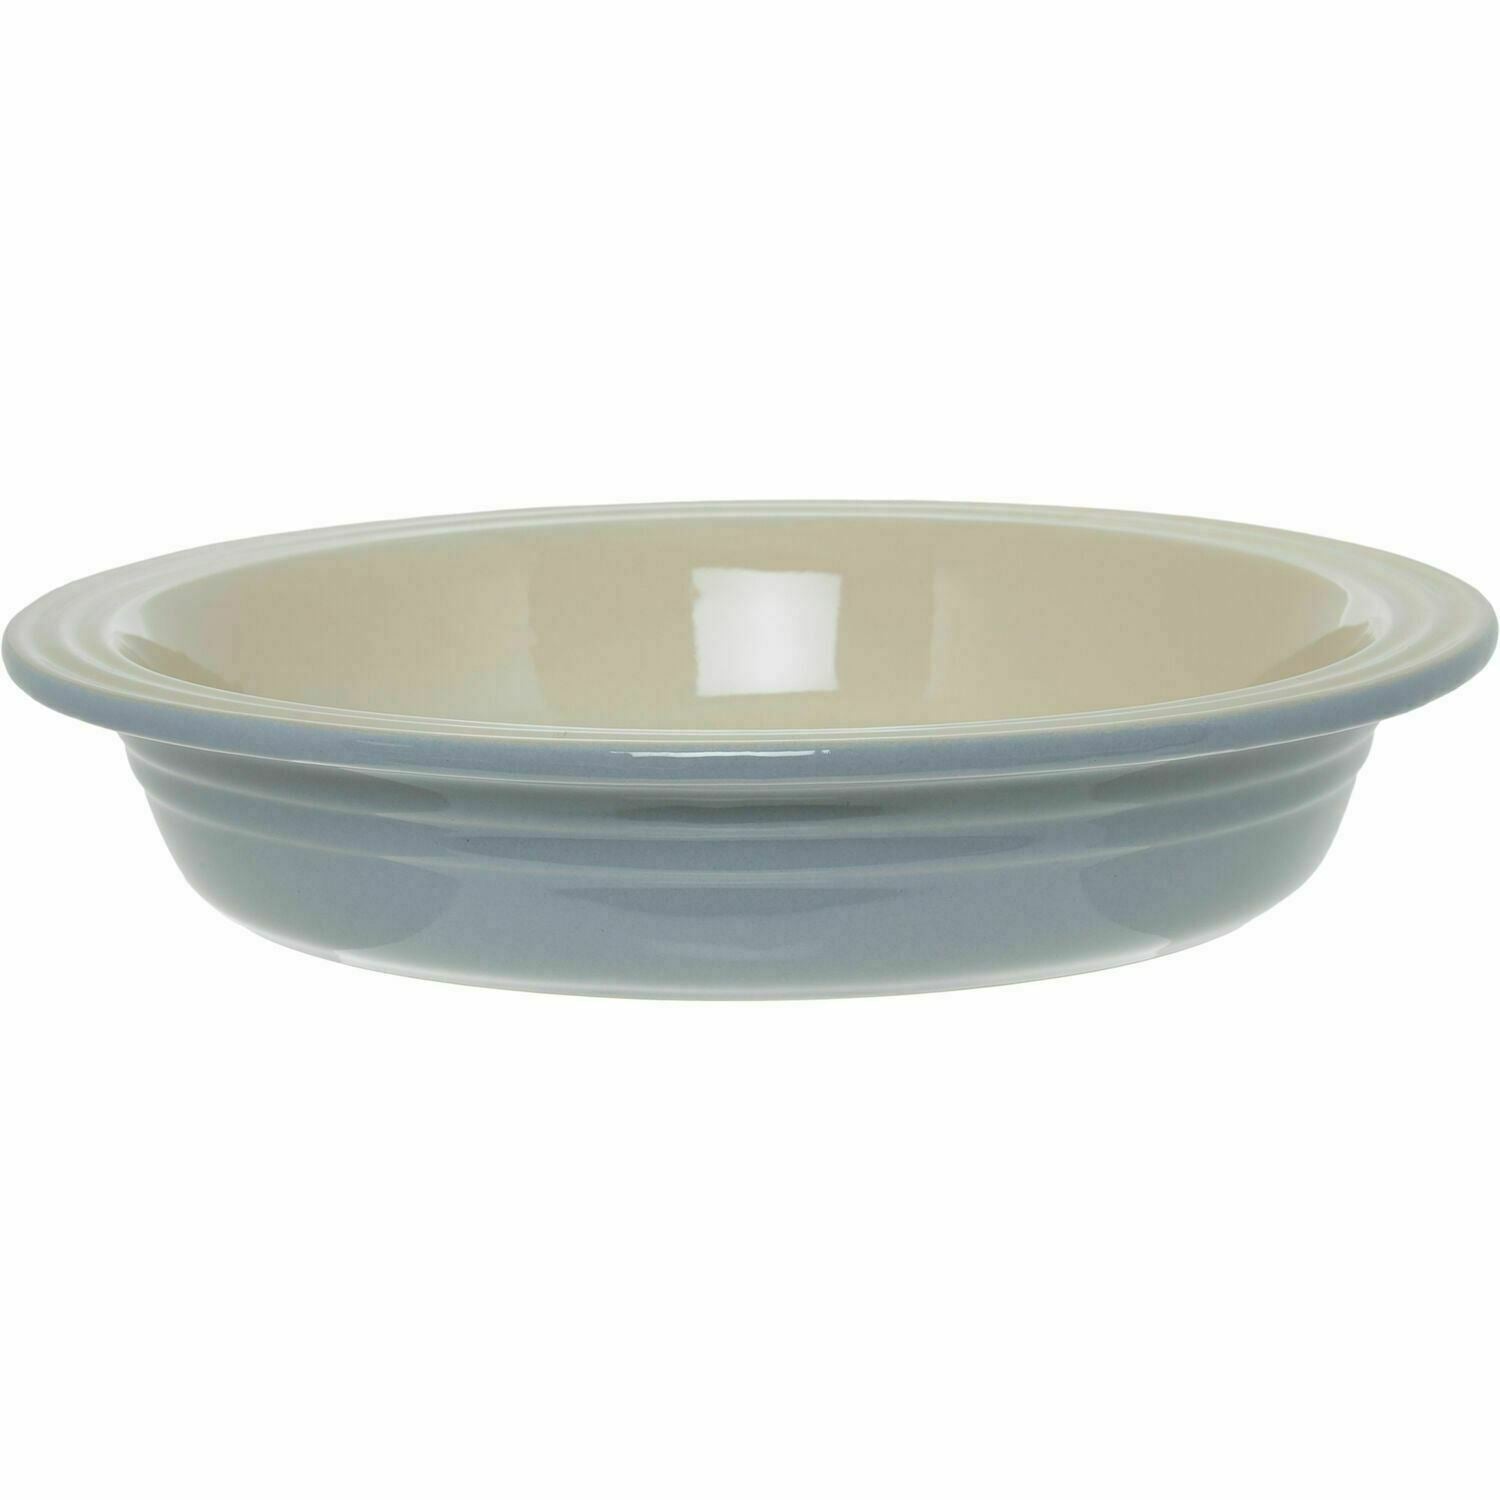 LE CREUSET Light Grey Round Baking Dish 26cm in diameter x 5.5cm deep *defect*